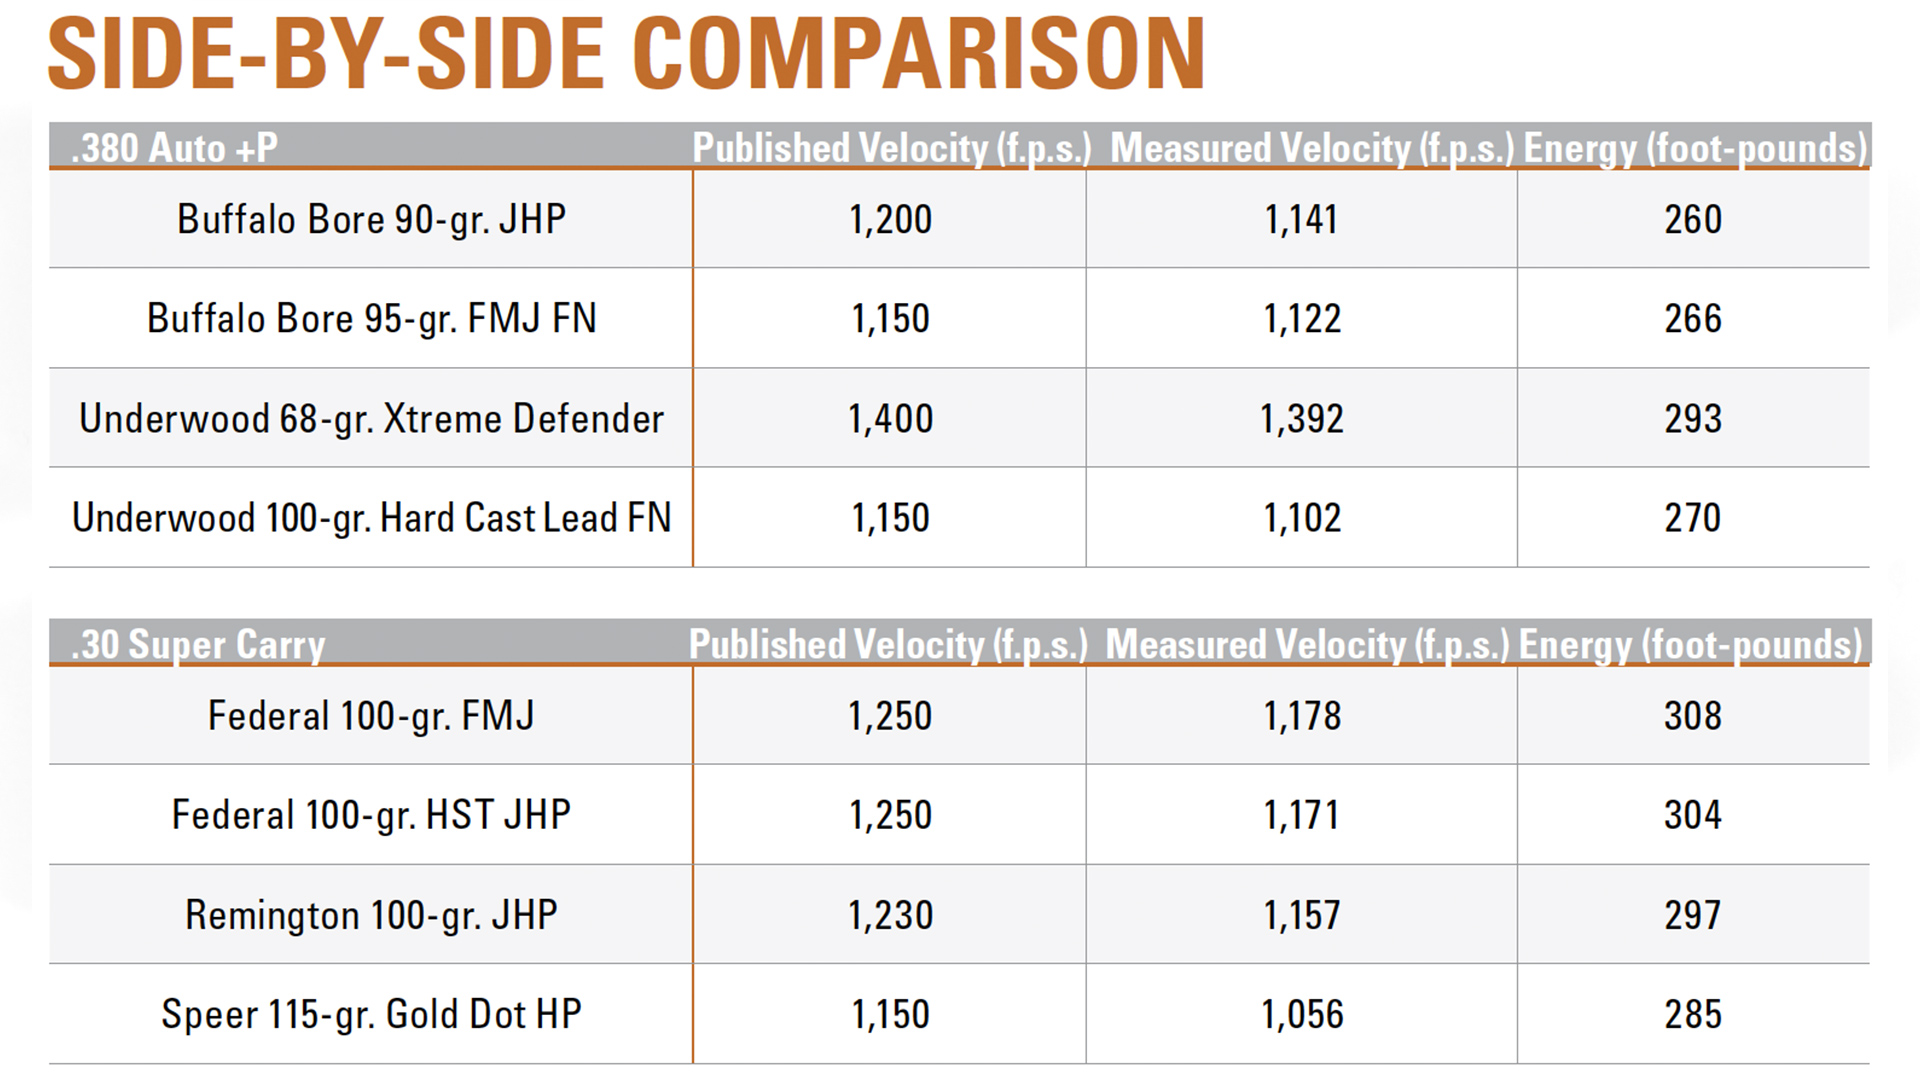 .380 Auto +P vs .30 Super Carry side-by-side comparison